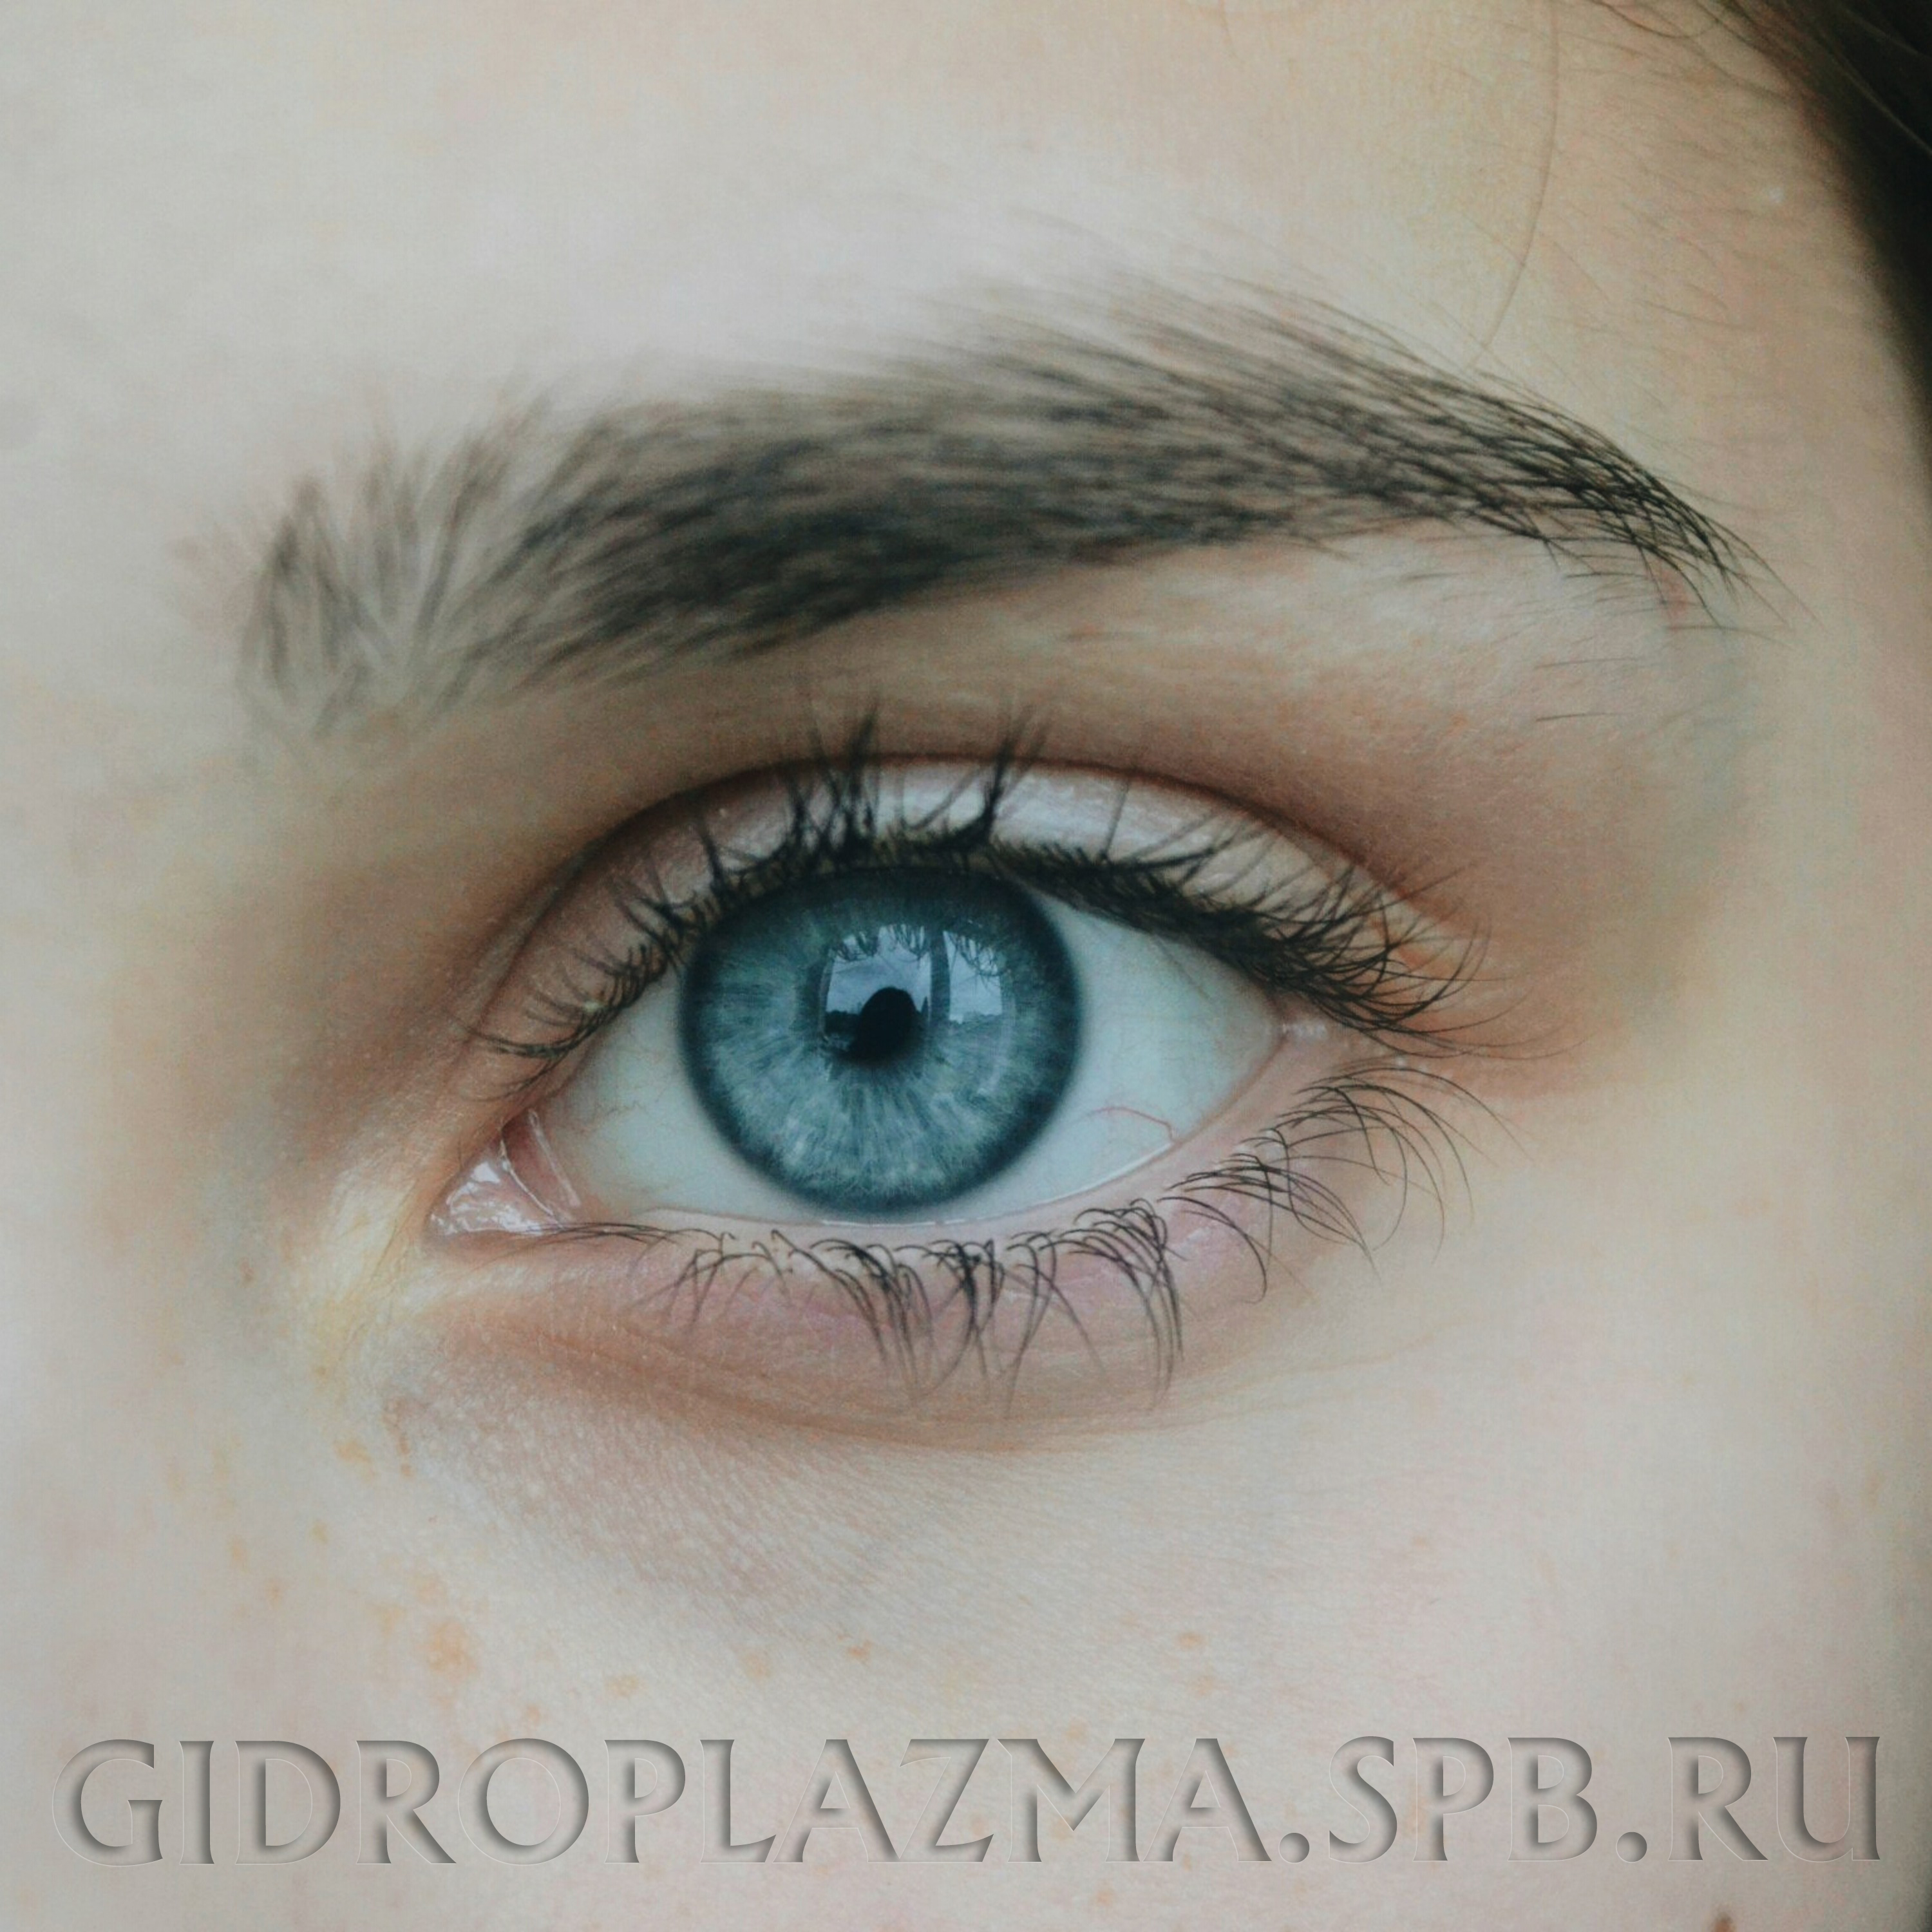 Гидроплазма для глаз